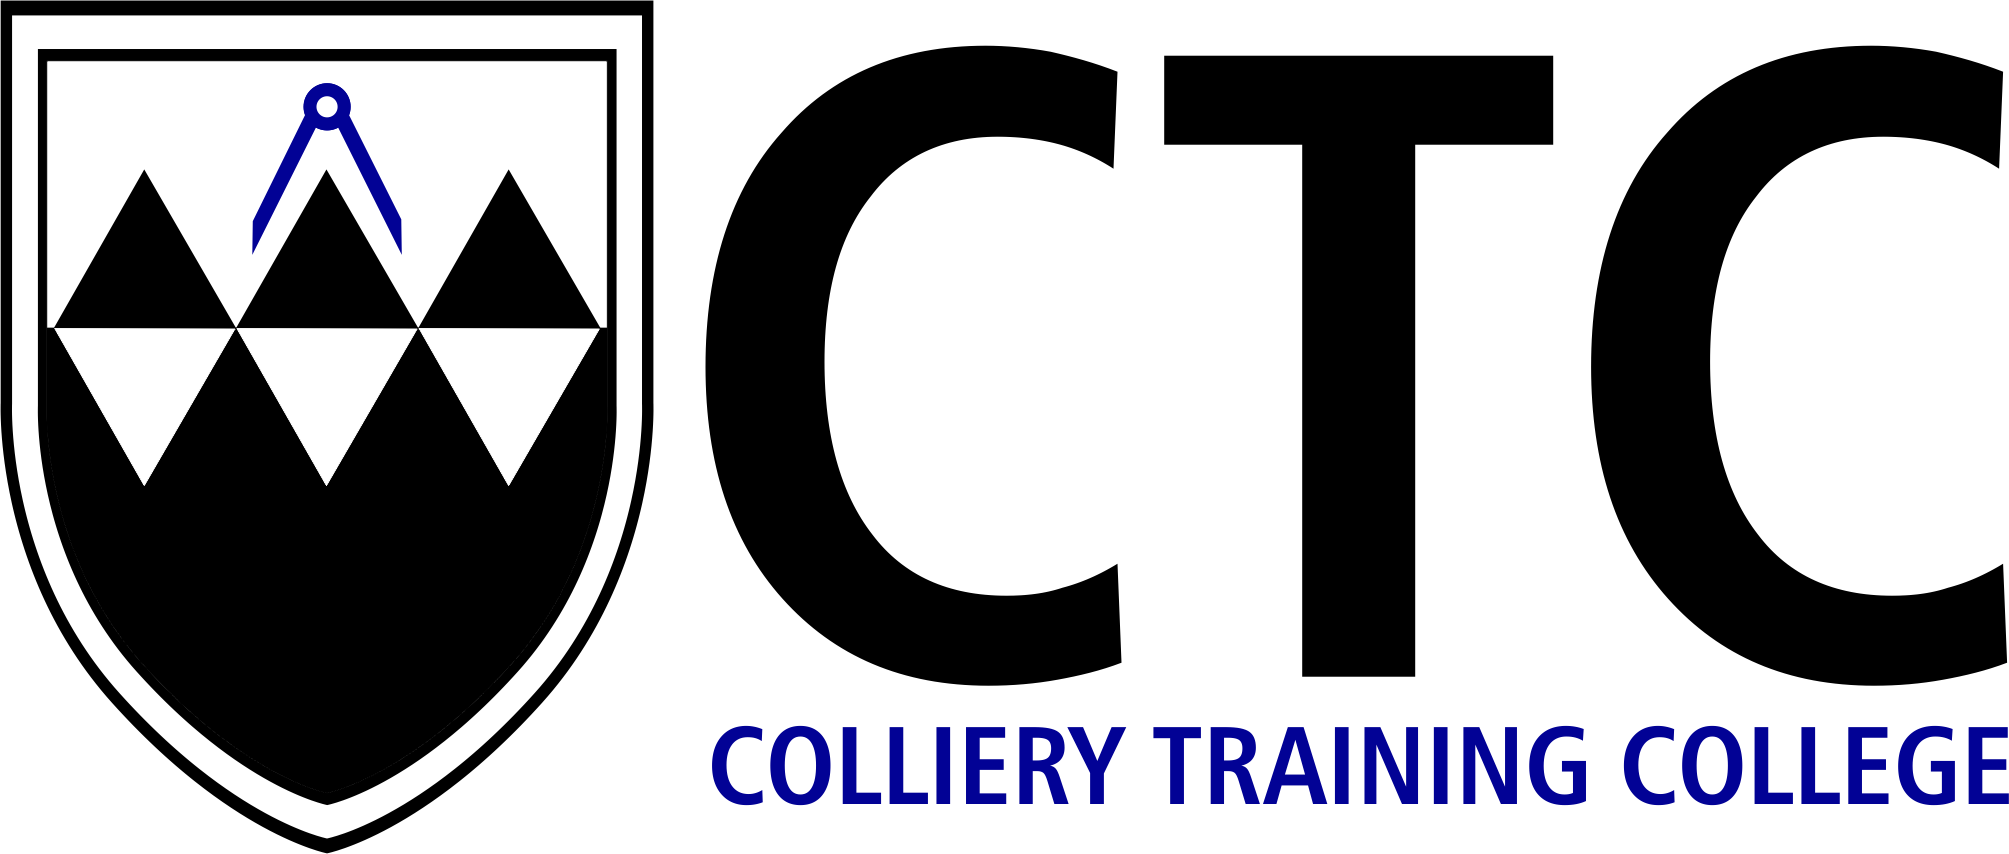 Colliery Training College Logo